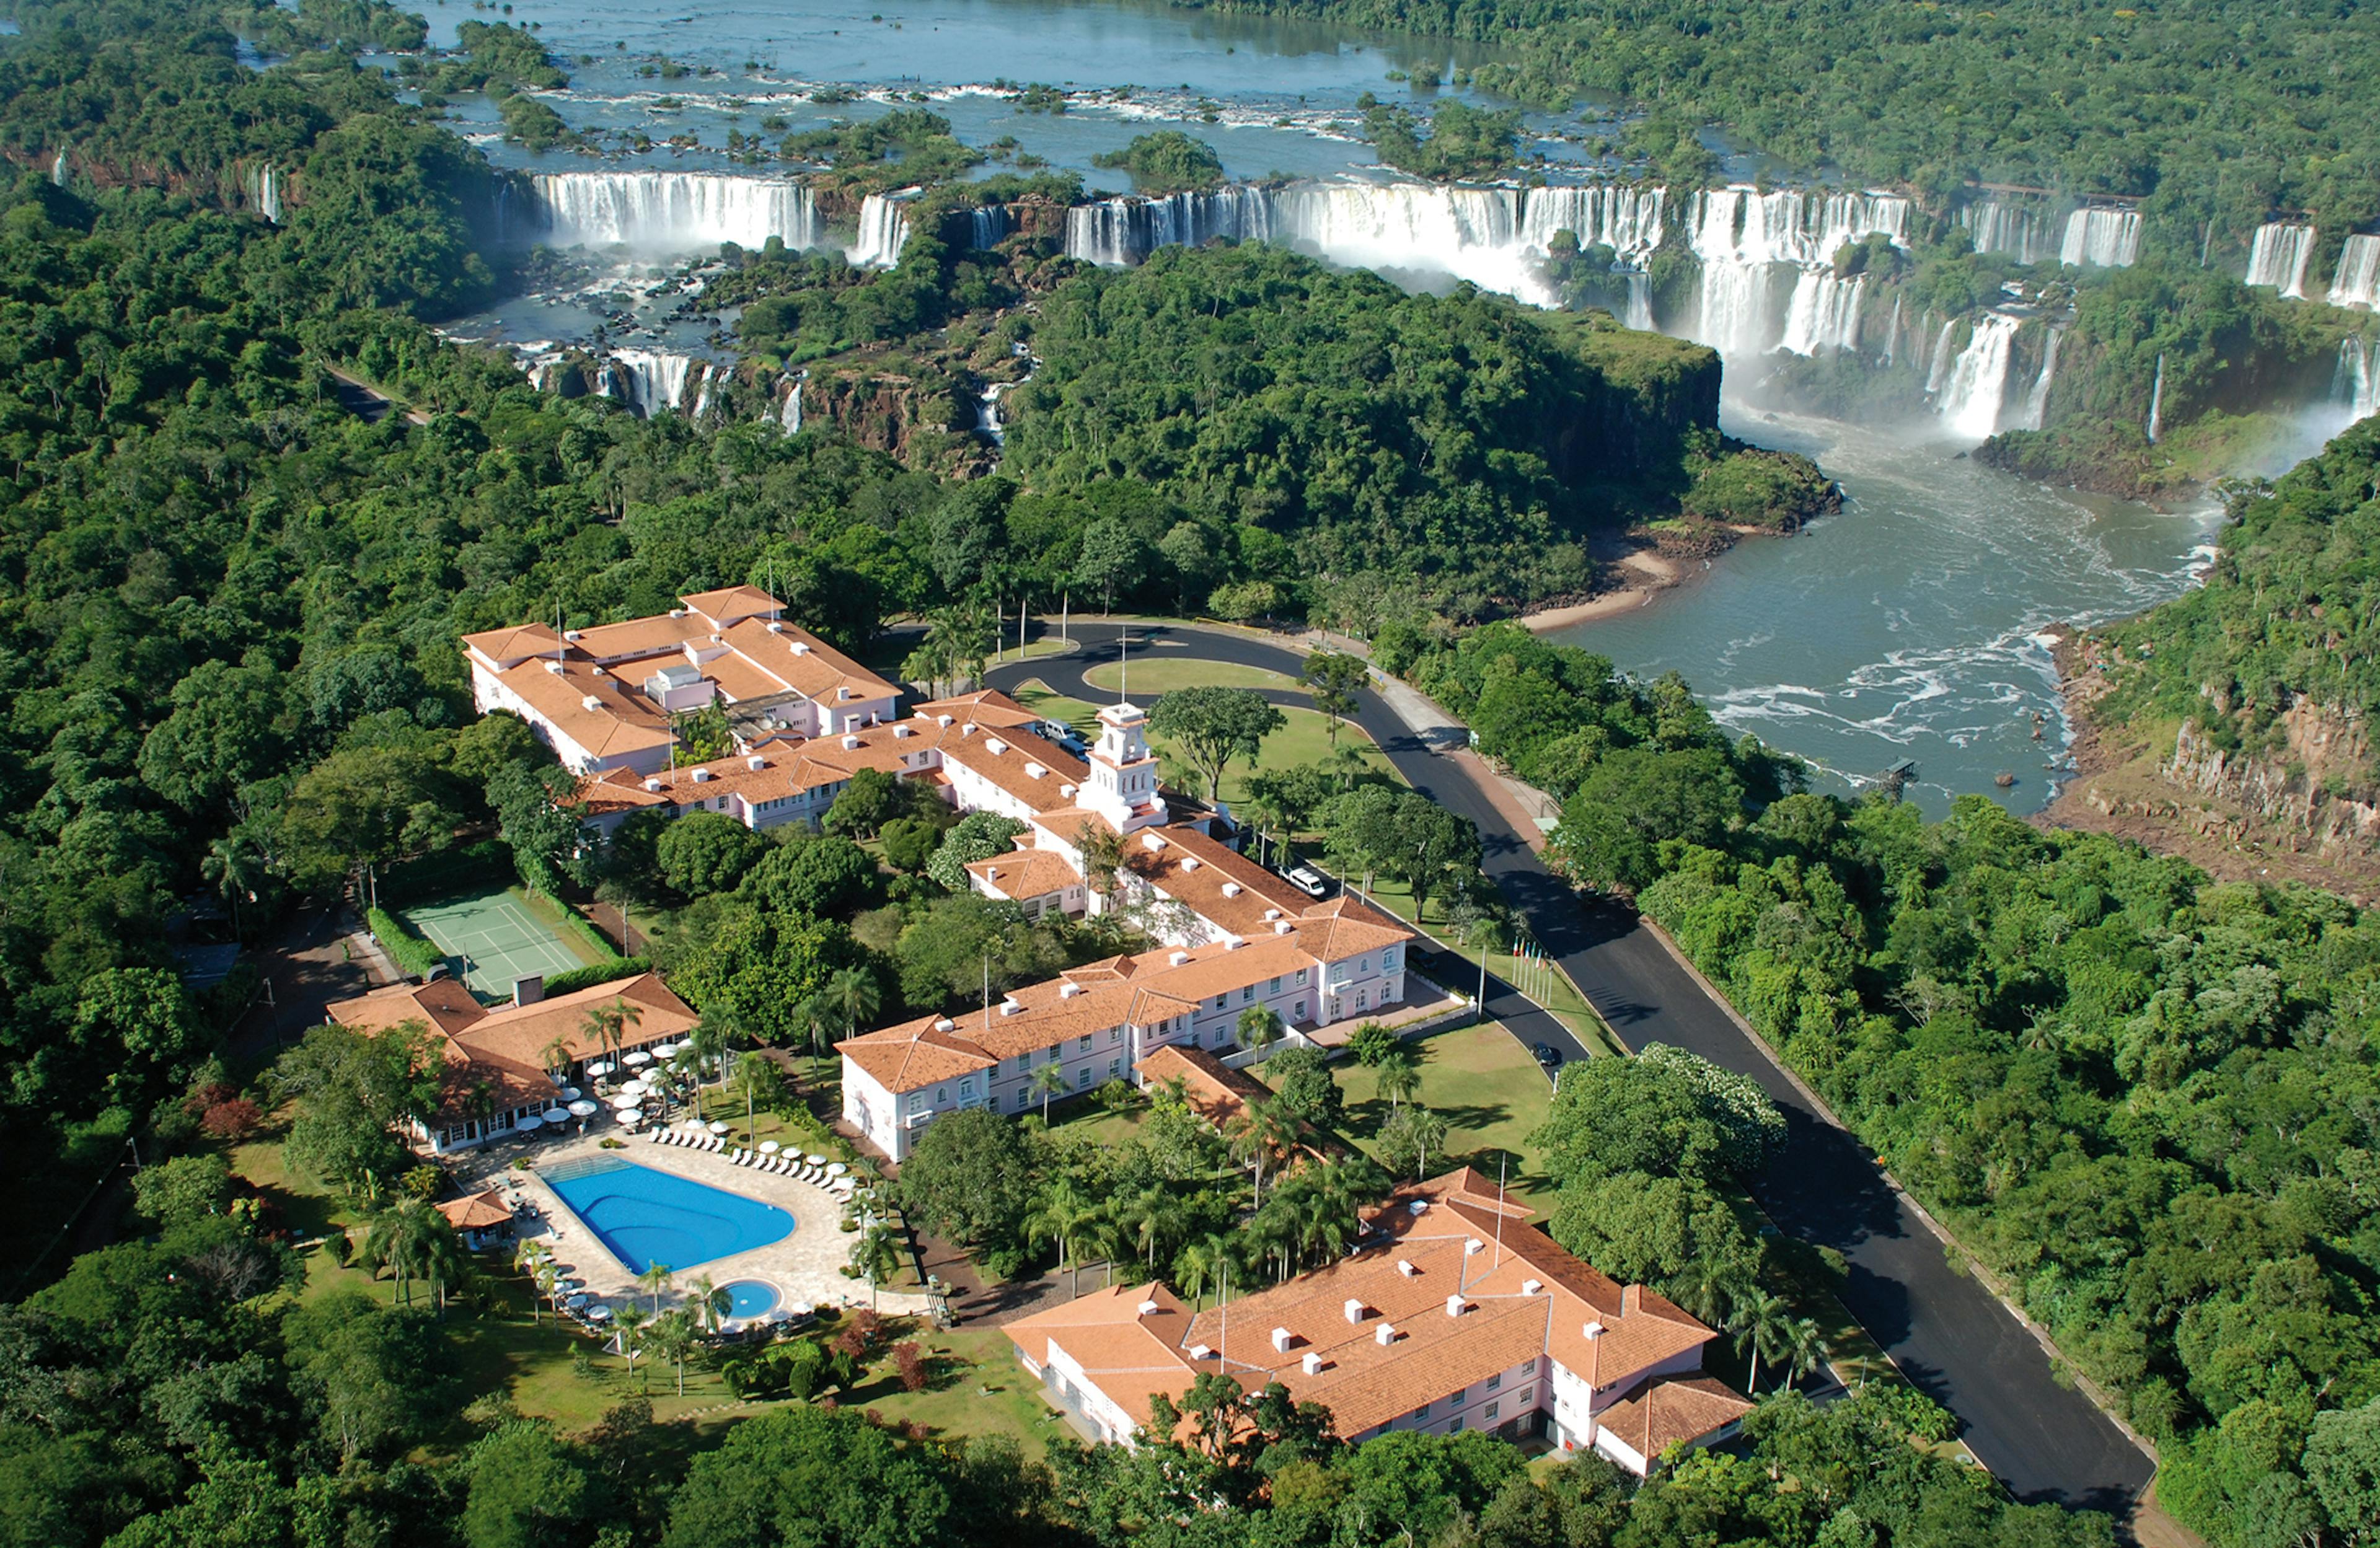 Belmond Hotel das Cataratas, Iguassu Falls, Brazil